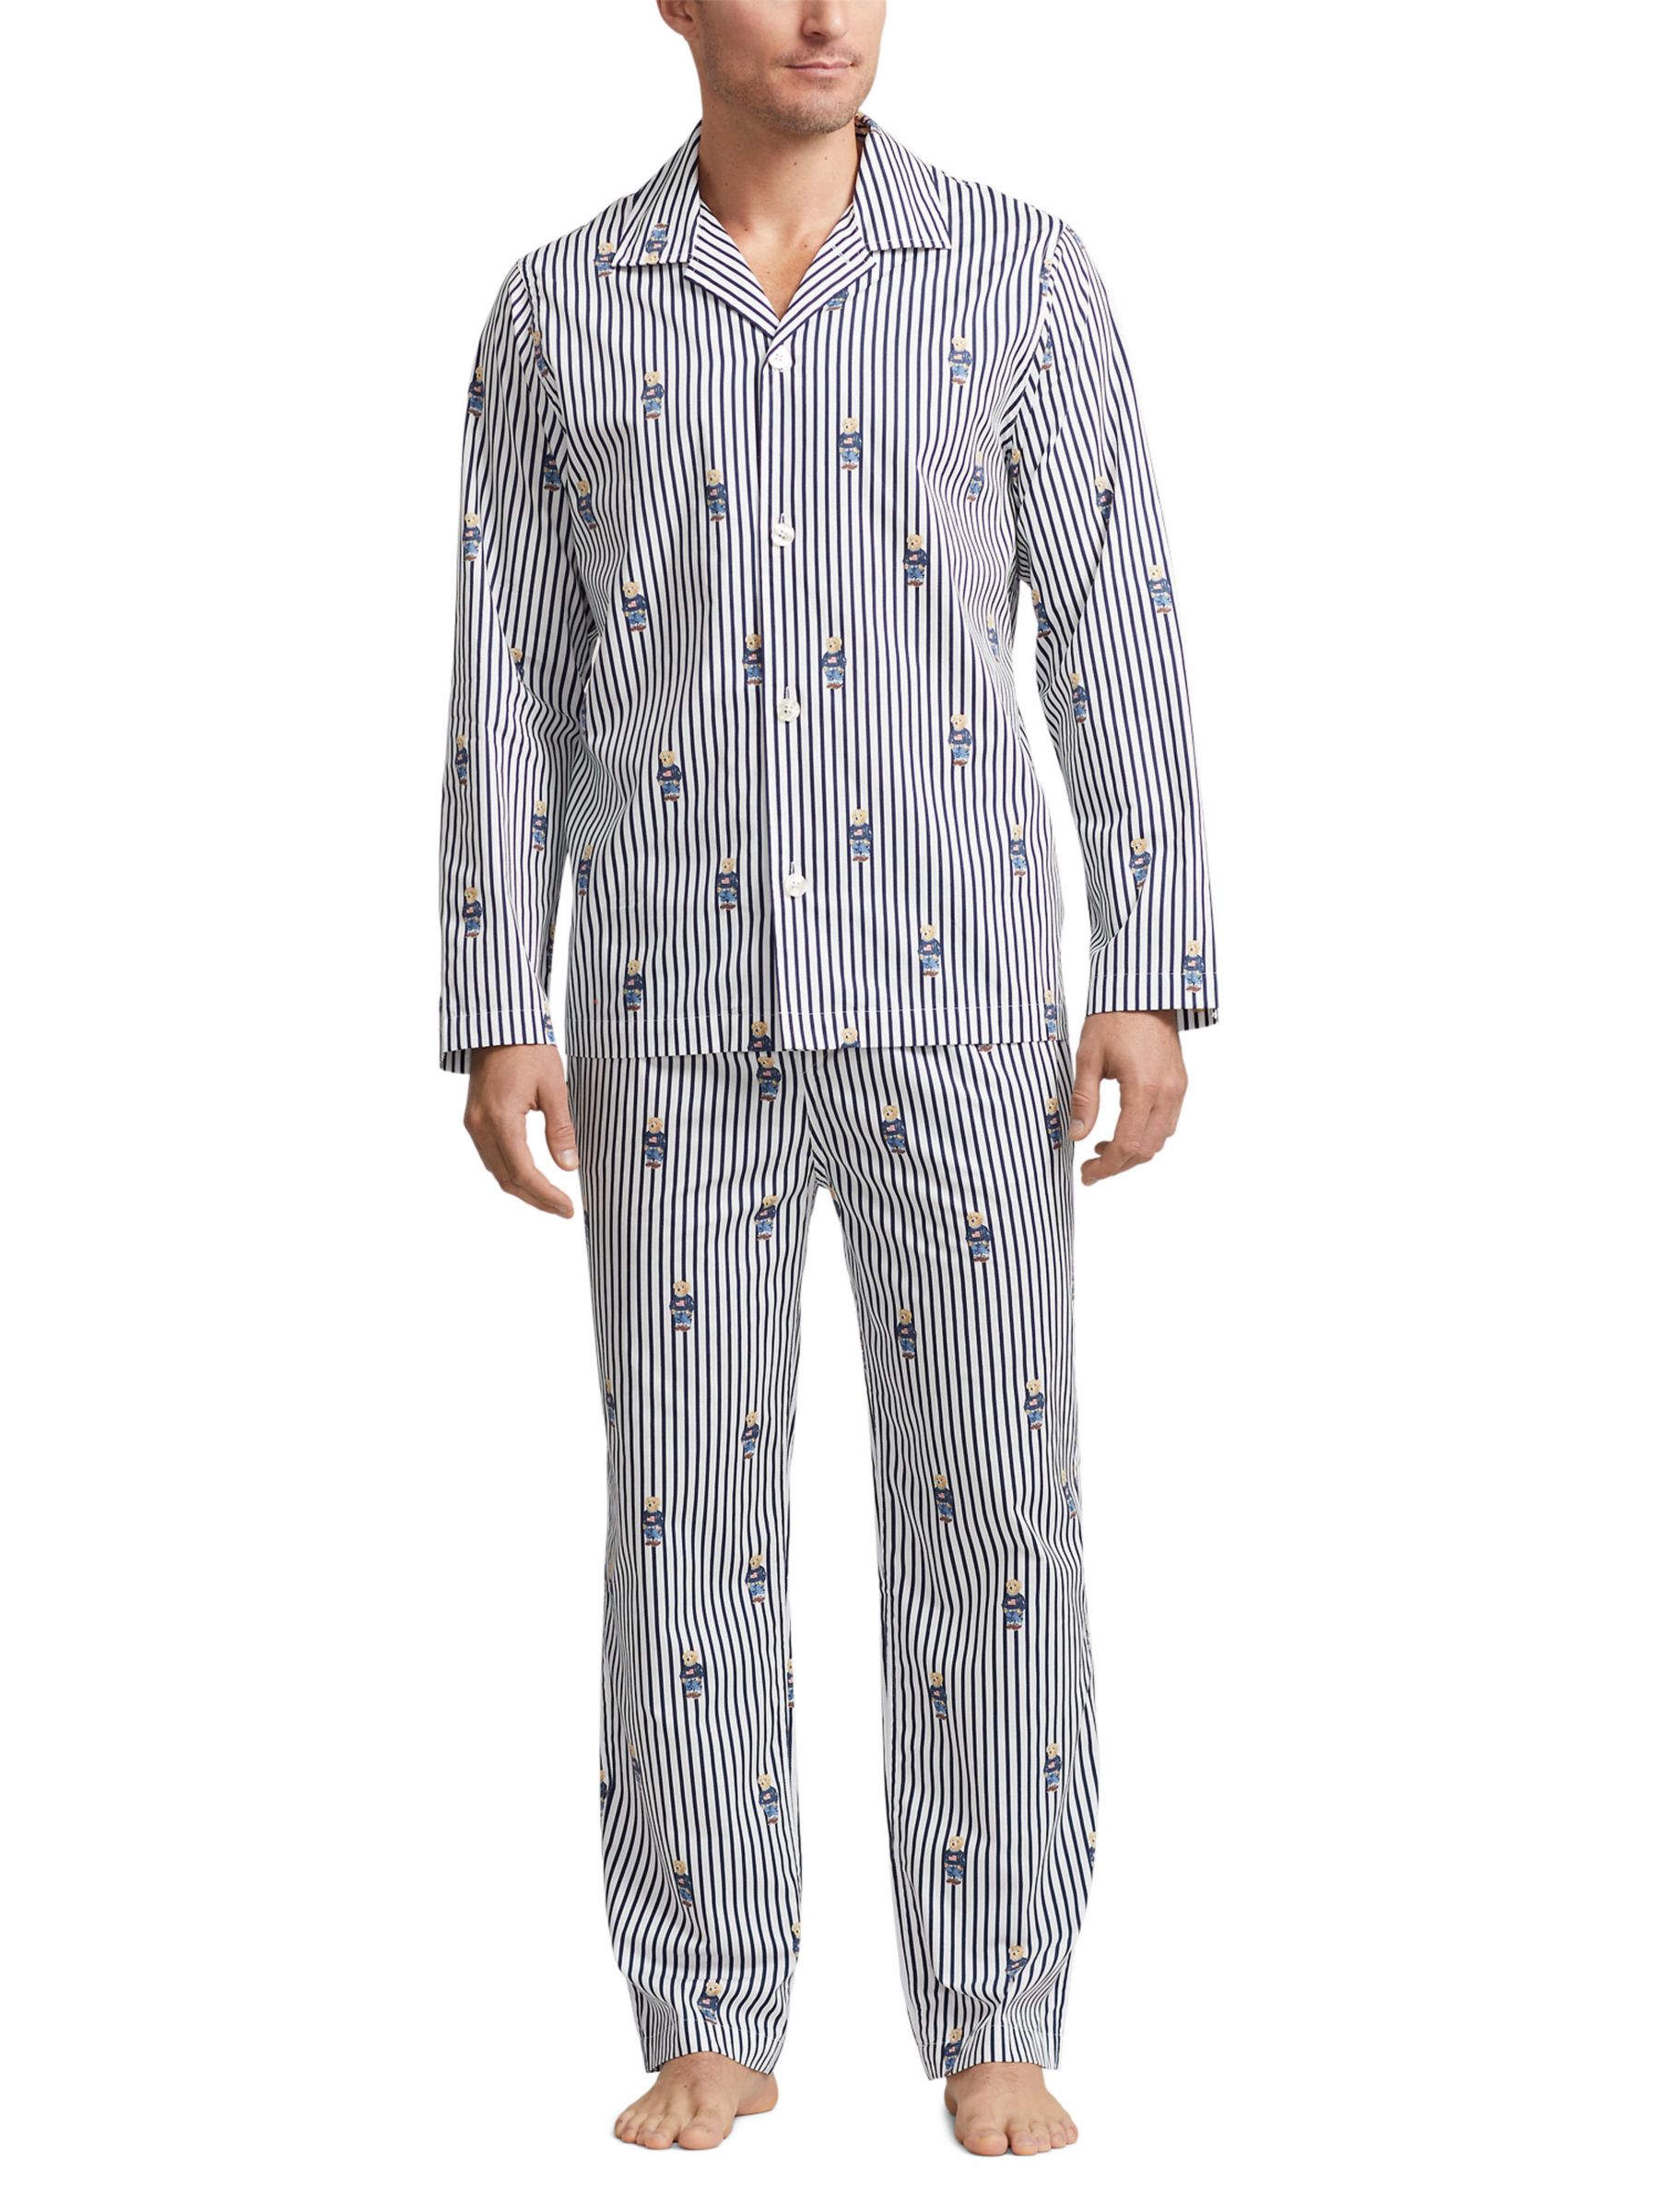 Polo Ralph Lauren Cotton Stripe Bear Long Sleeve Pyjama Set, Navy/White, S